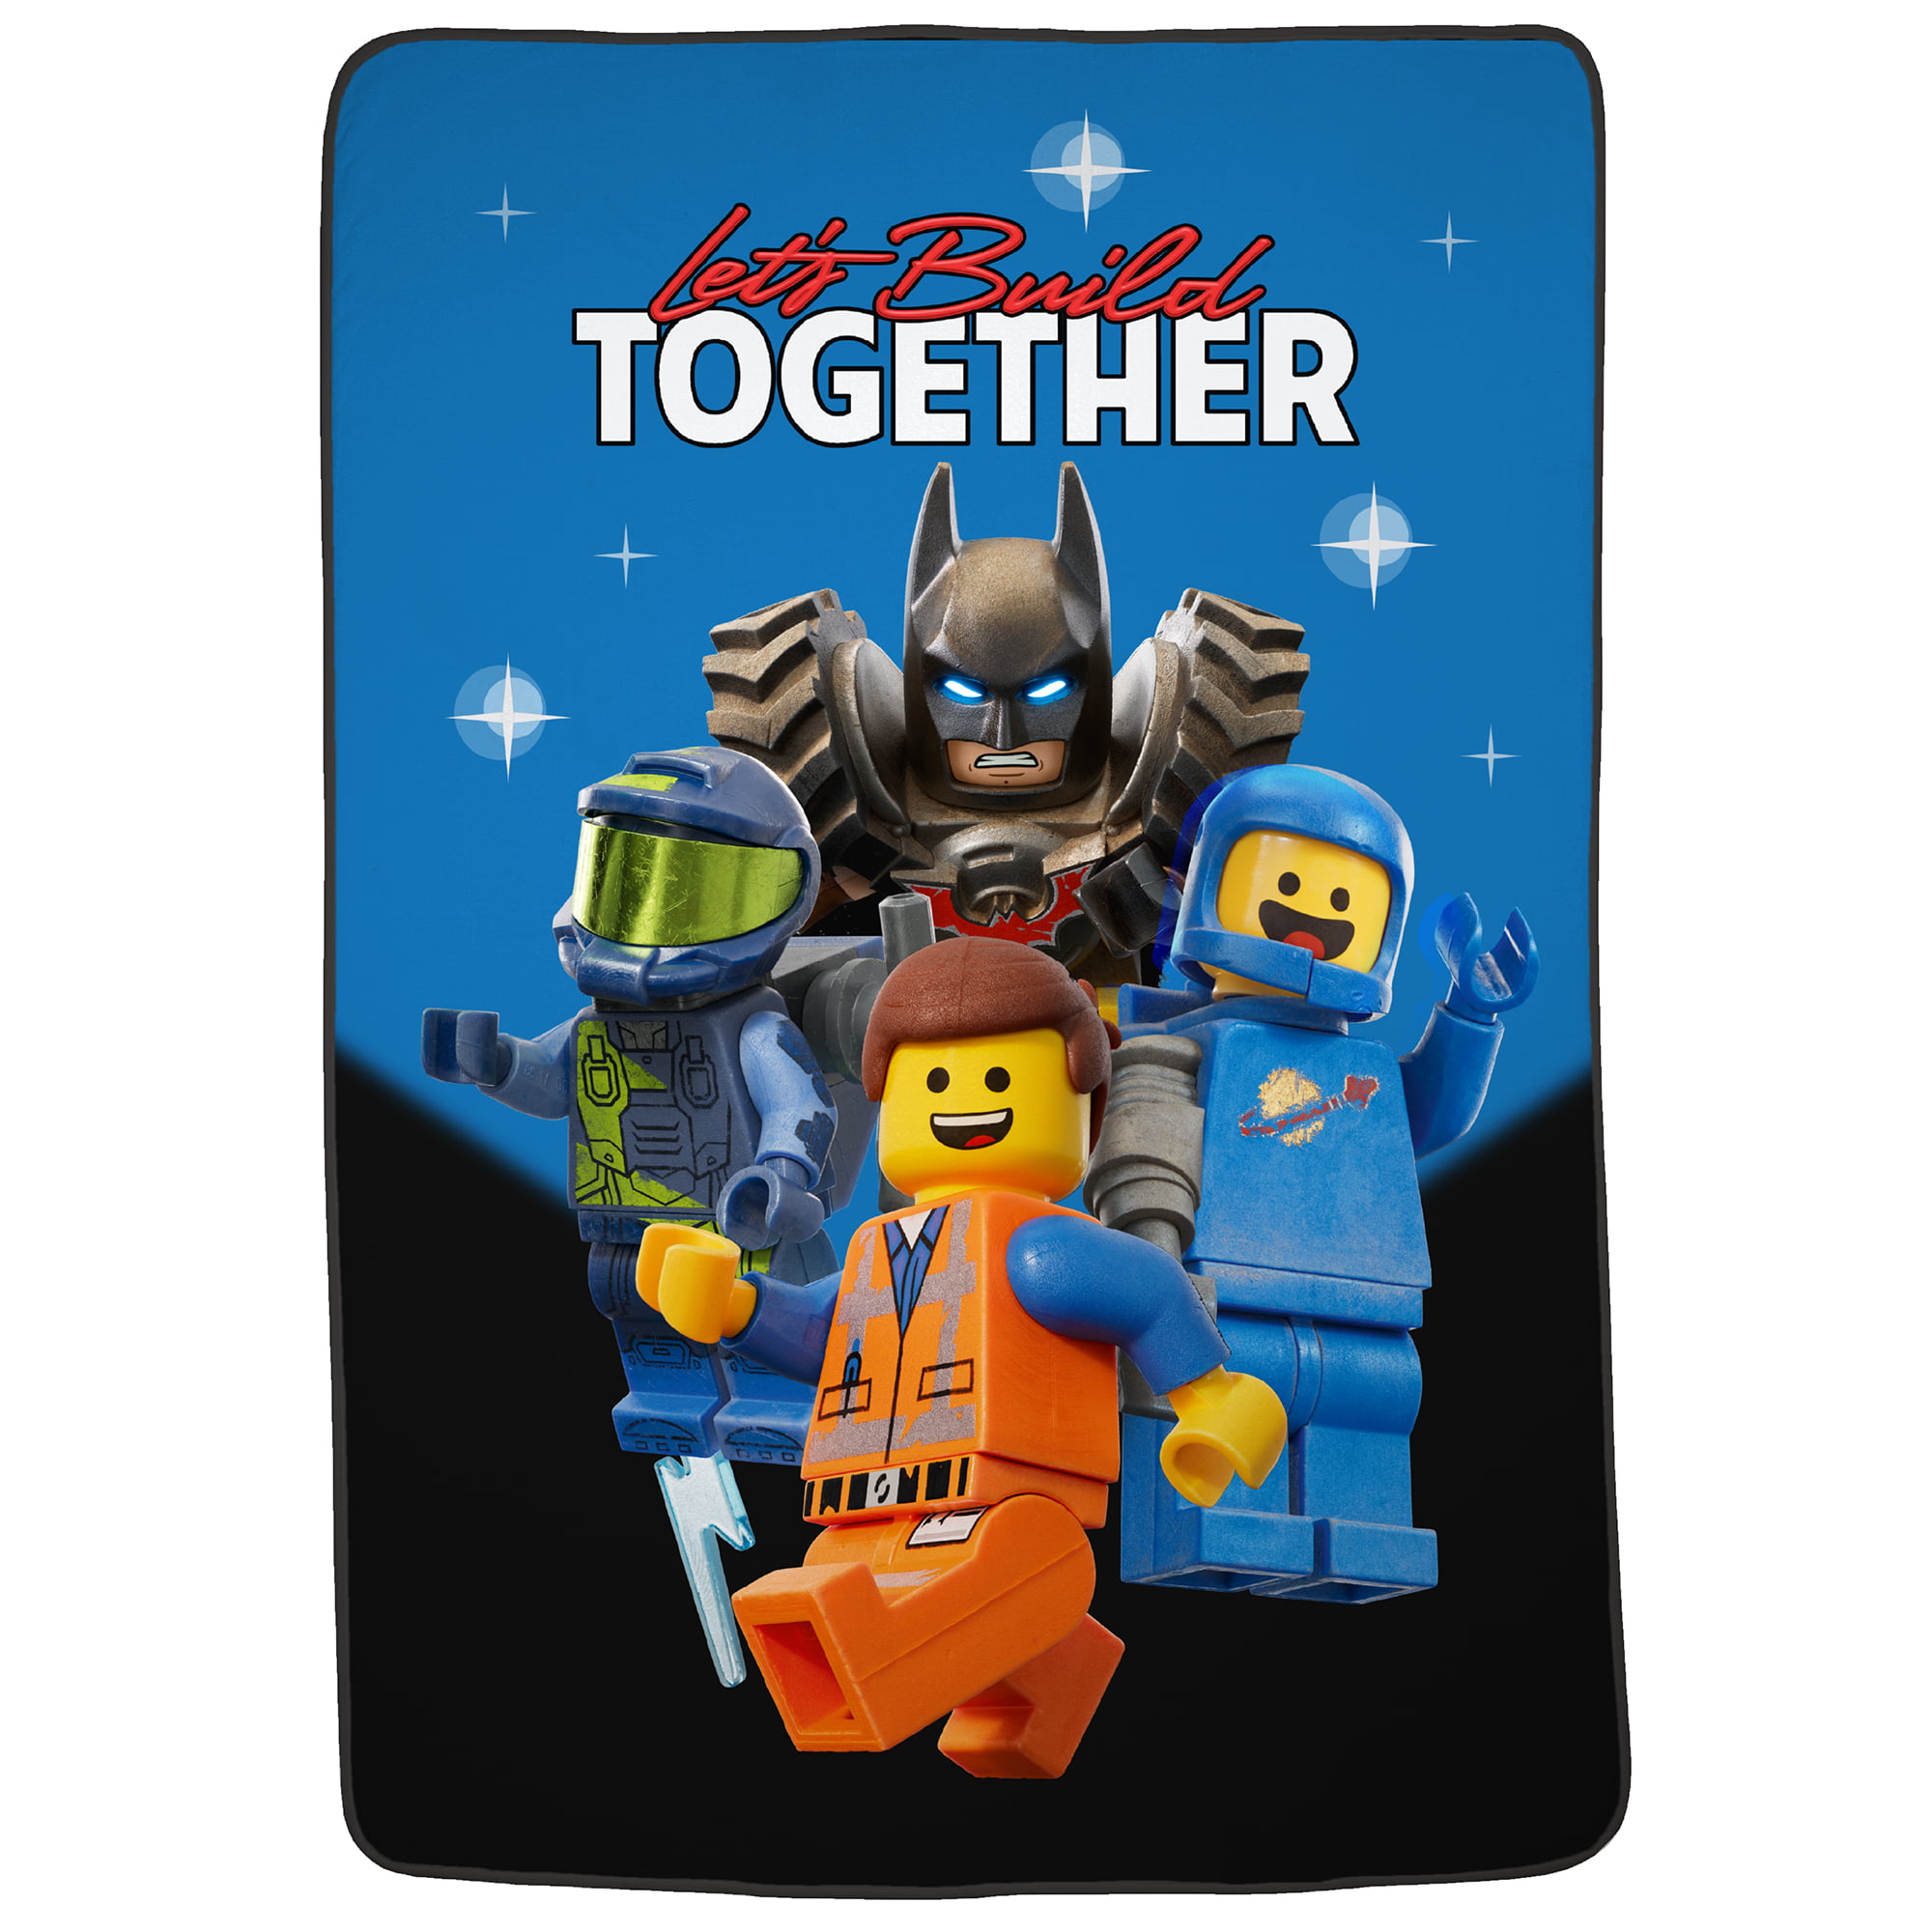 Lego The Movie VEST FRIENDS Plush Throw Blanket-46x60" 1109400 